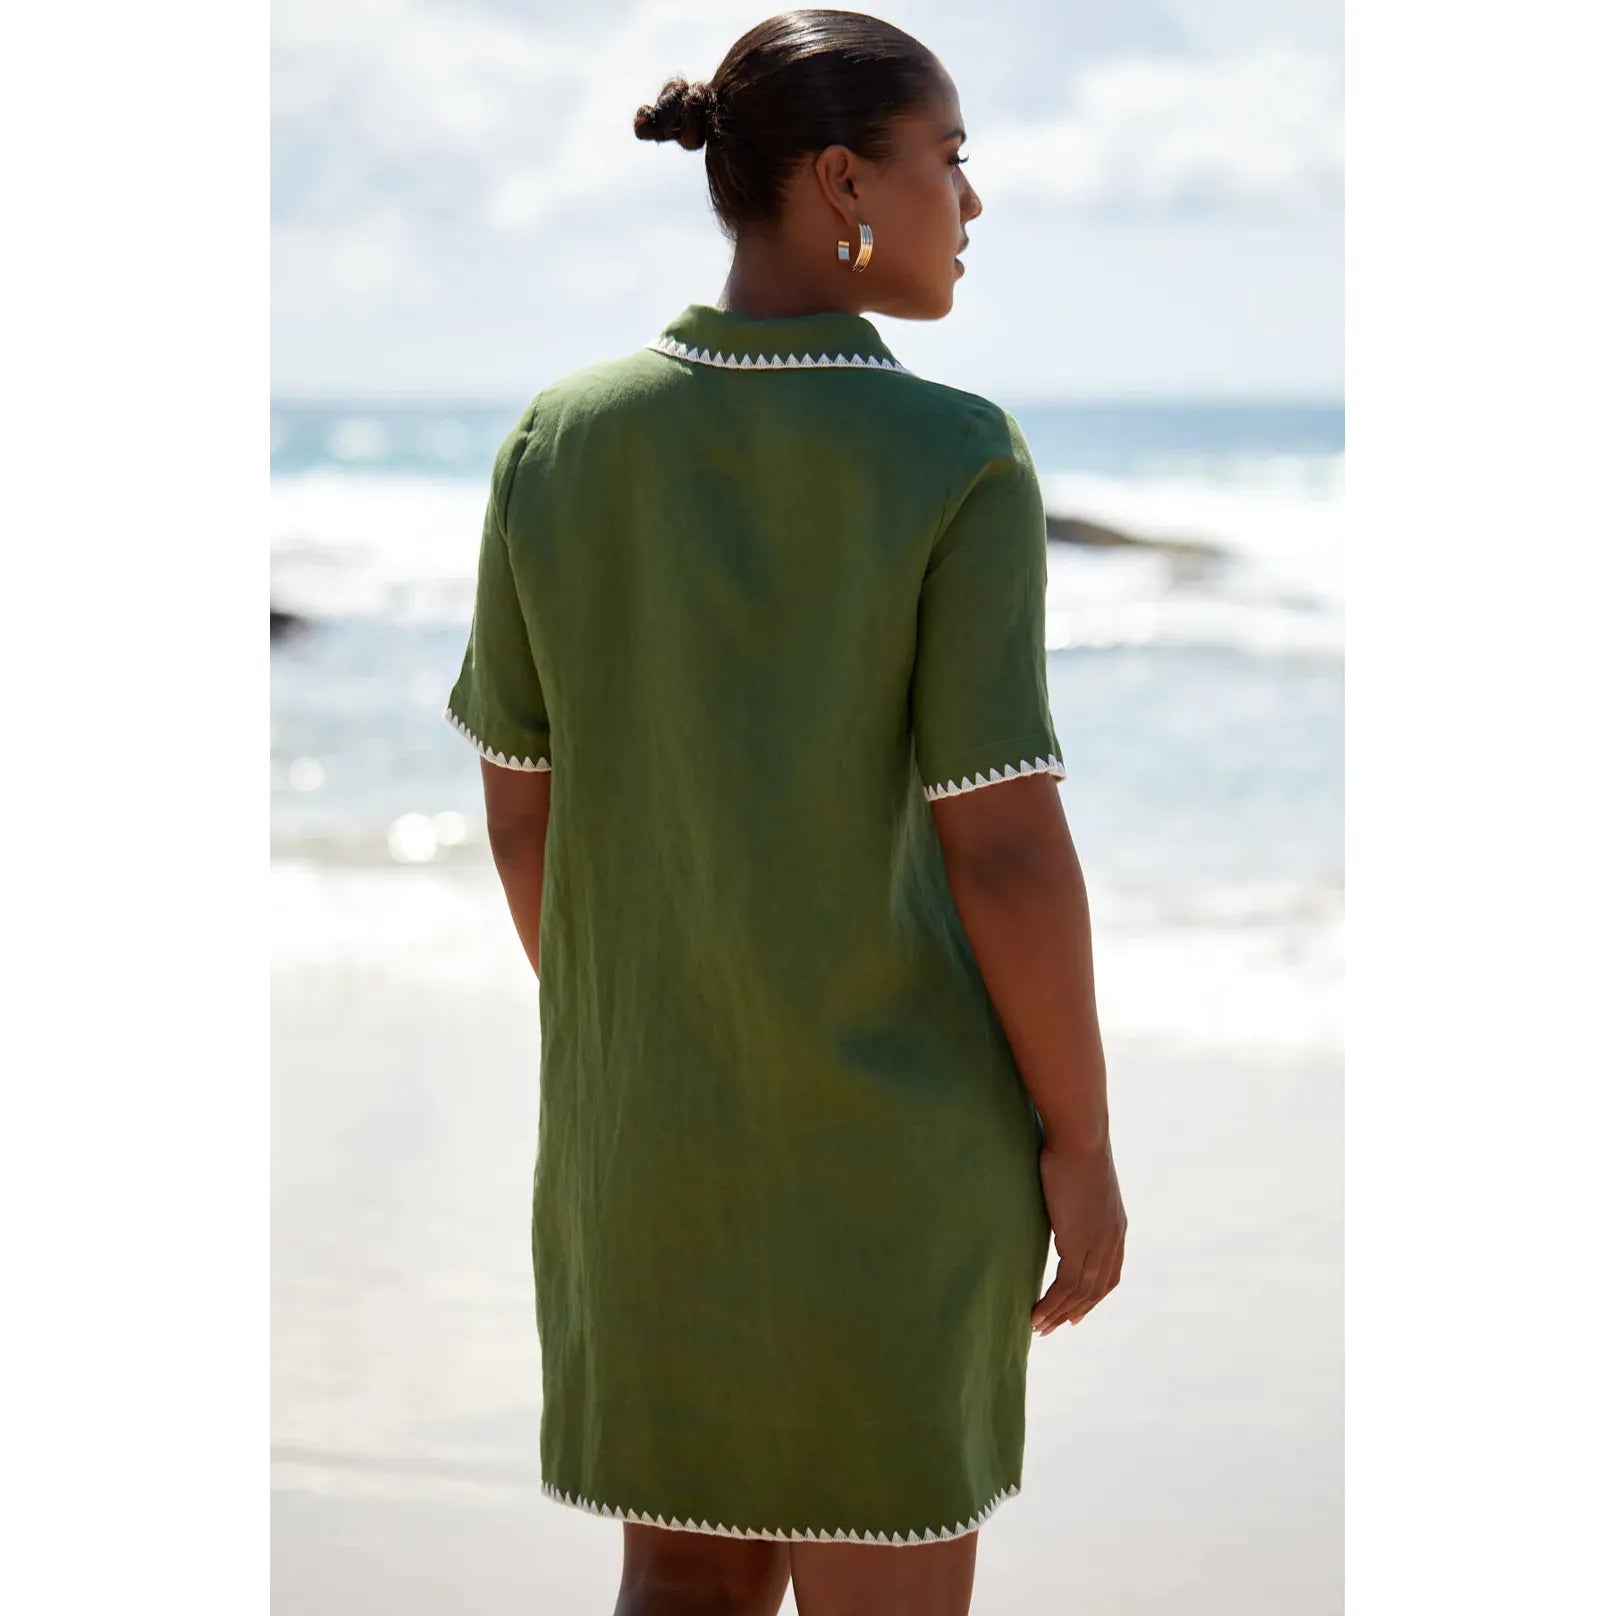 Ebony Stitched Hem Dress - Khaki